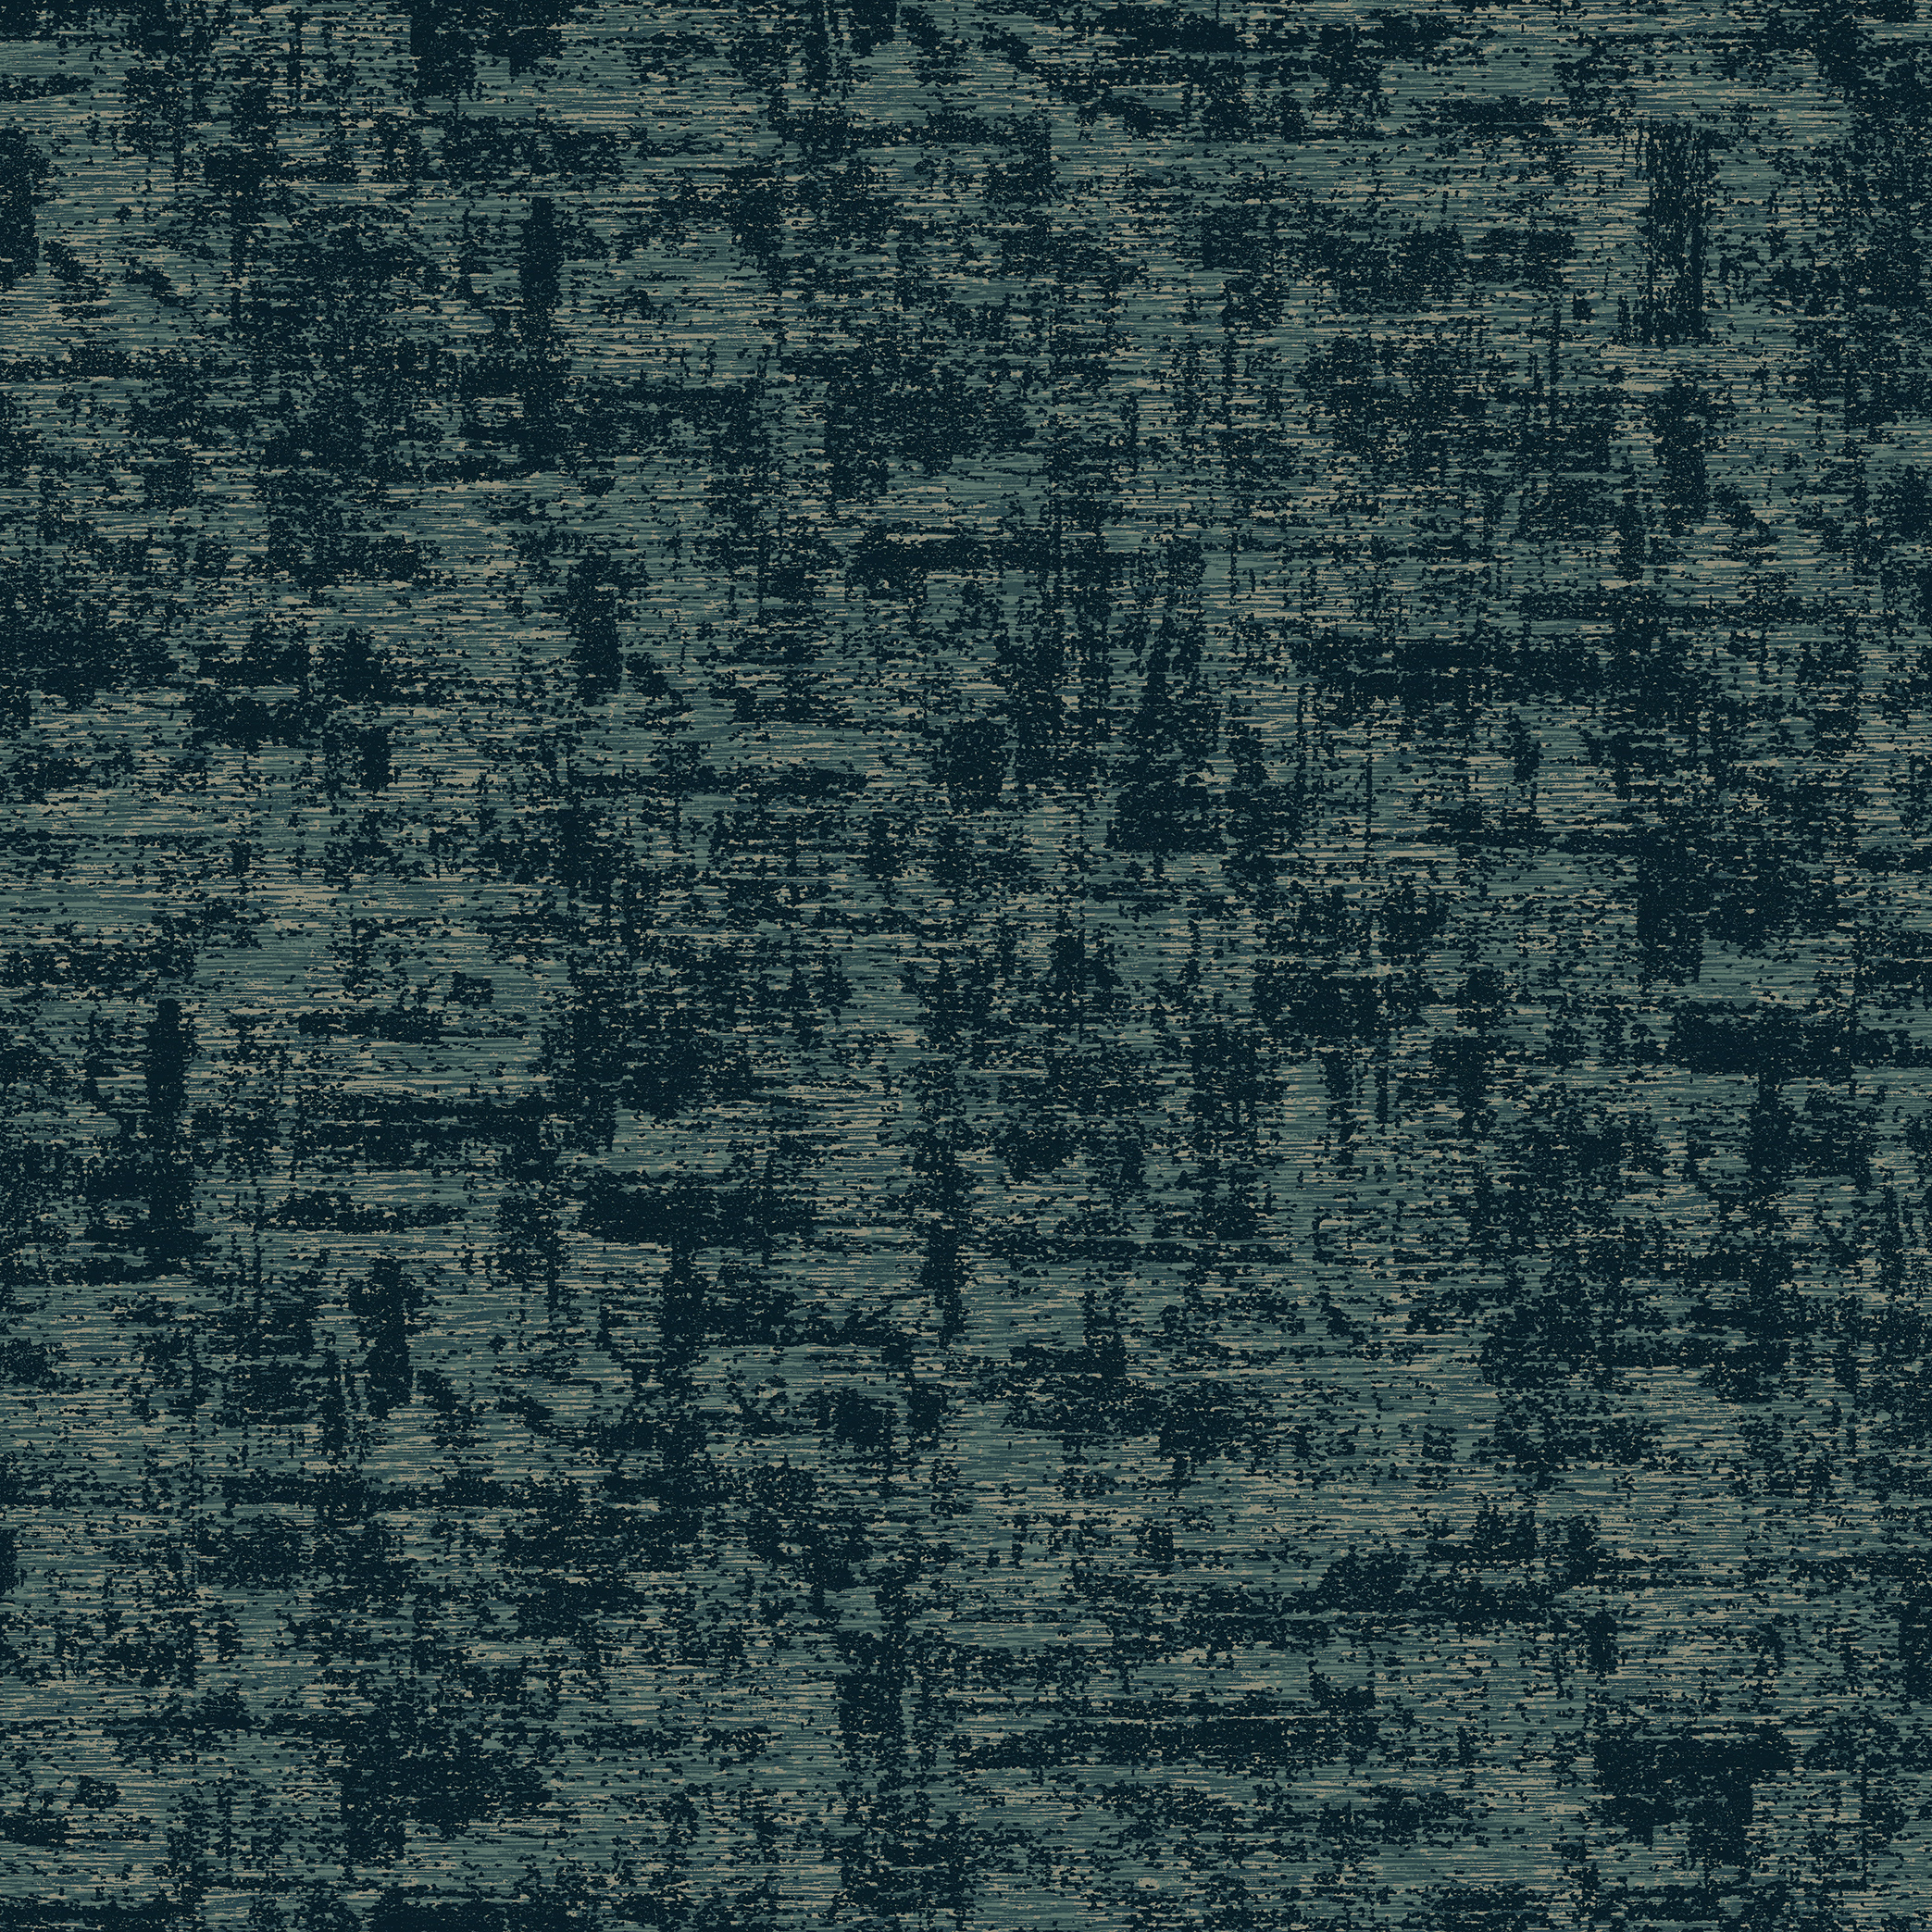 Image of Holden Decor Brindle Flock Texture Teal Wallpaper - 10.05m x 53cm